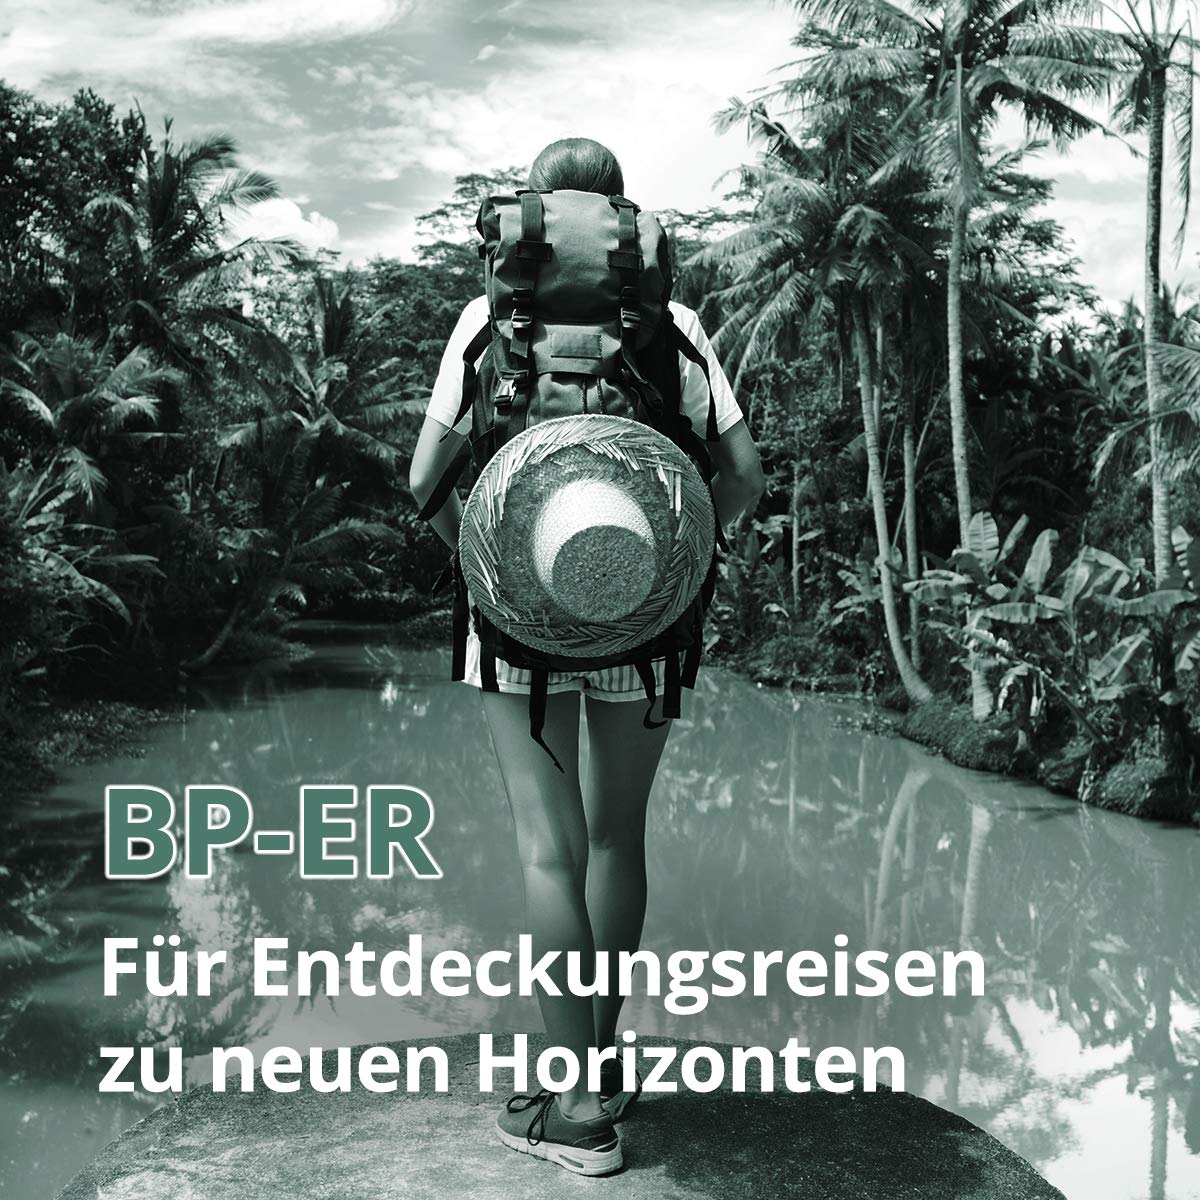 BP-ER Elite Emergency Food 12 x 500g | Notnahrung Notvorrat